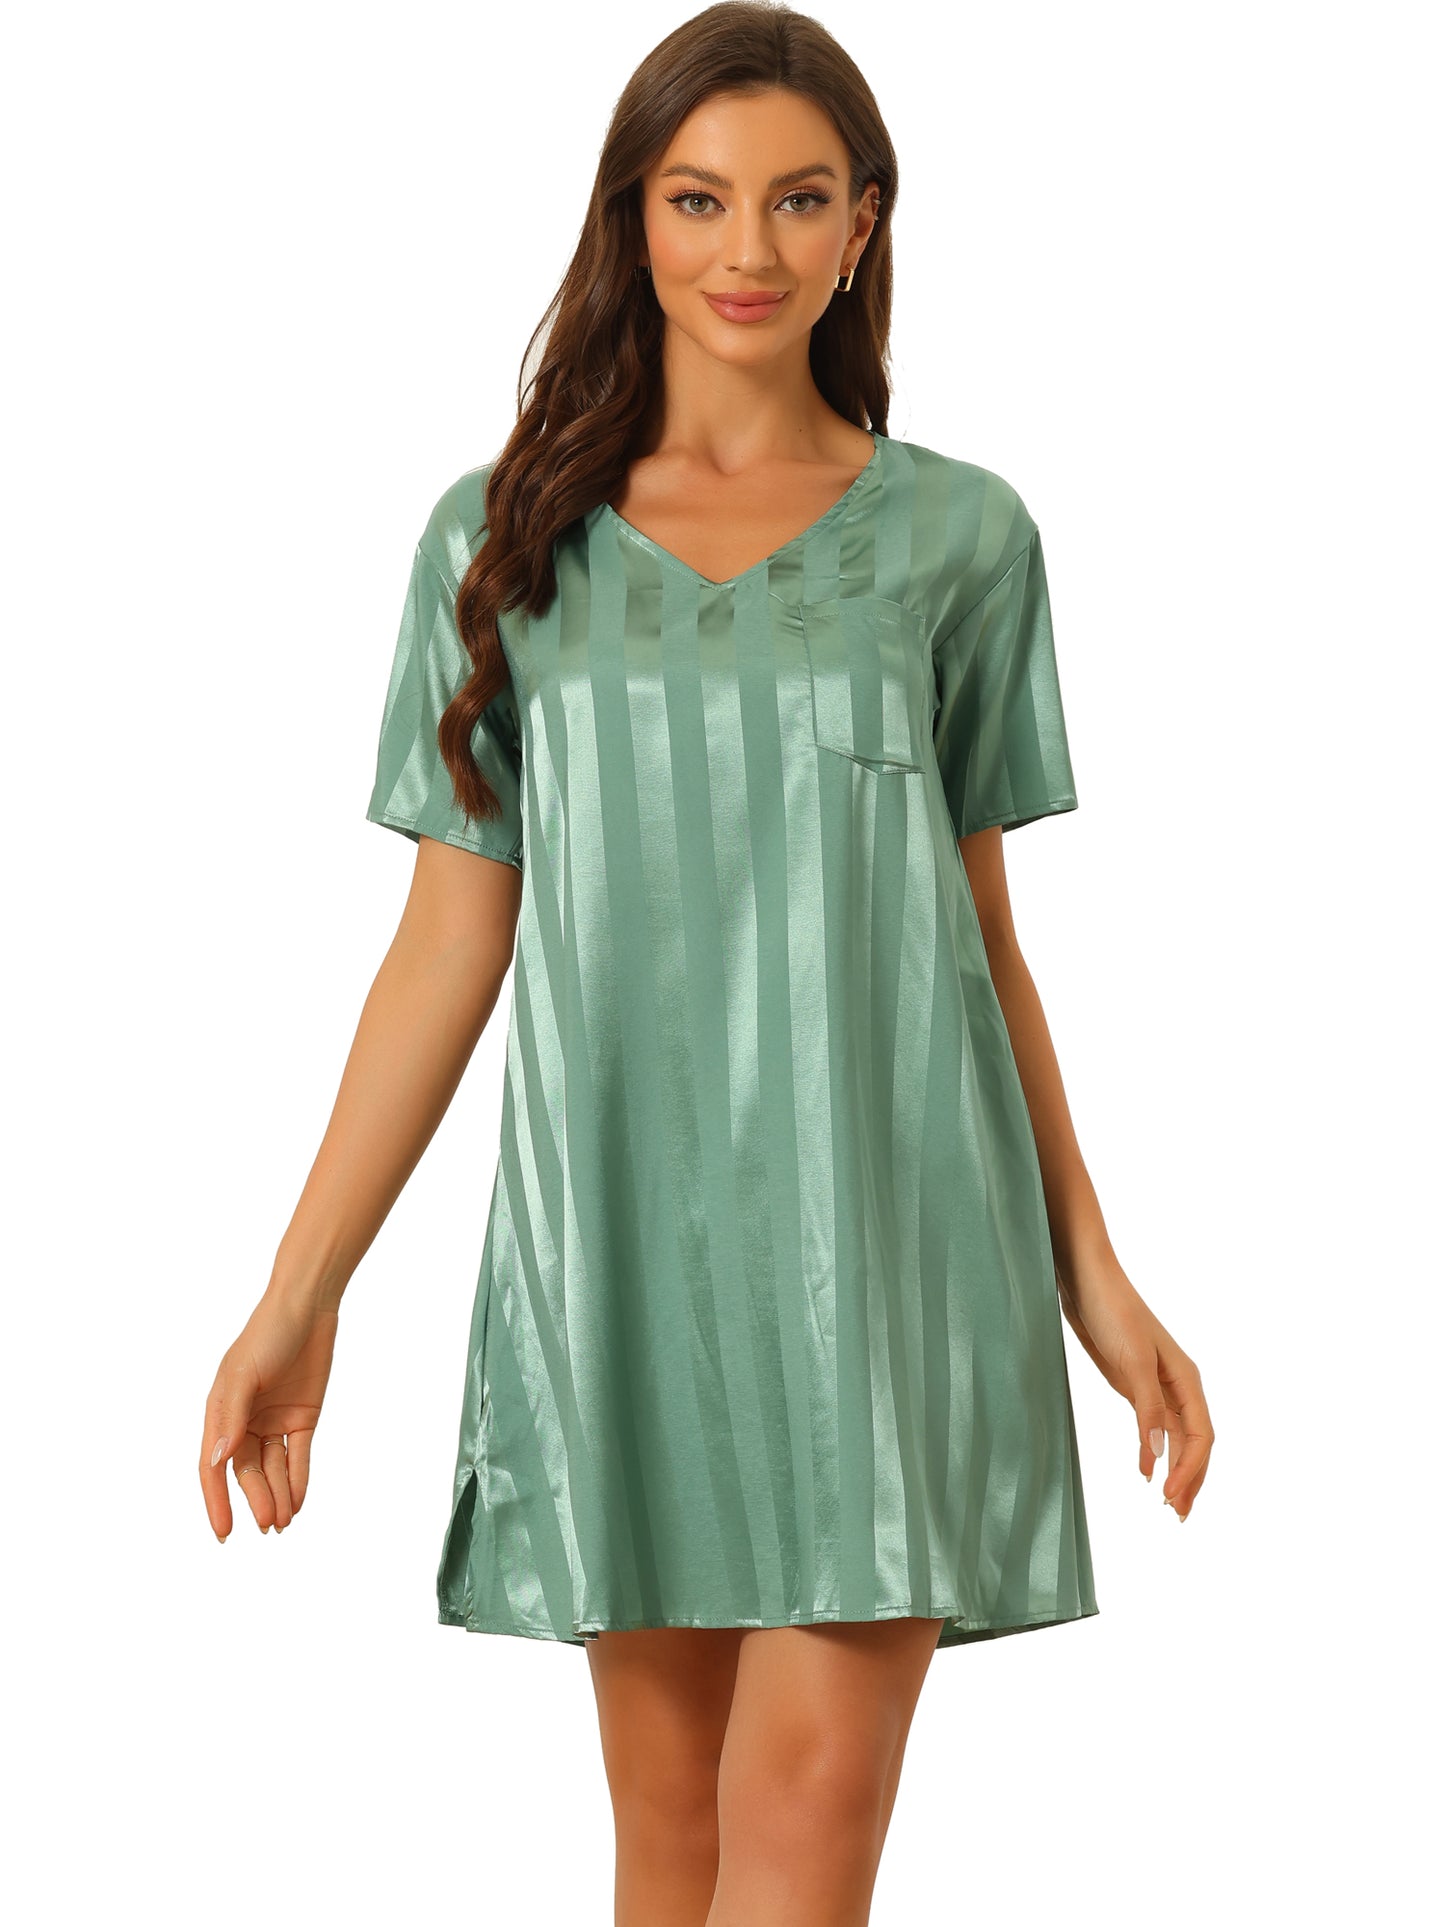 cheibear Pajamas Satin Dress Nightshirt Short Sleeves Lounge Sleepwear Nightgown Green